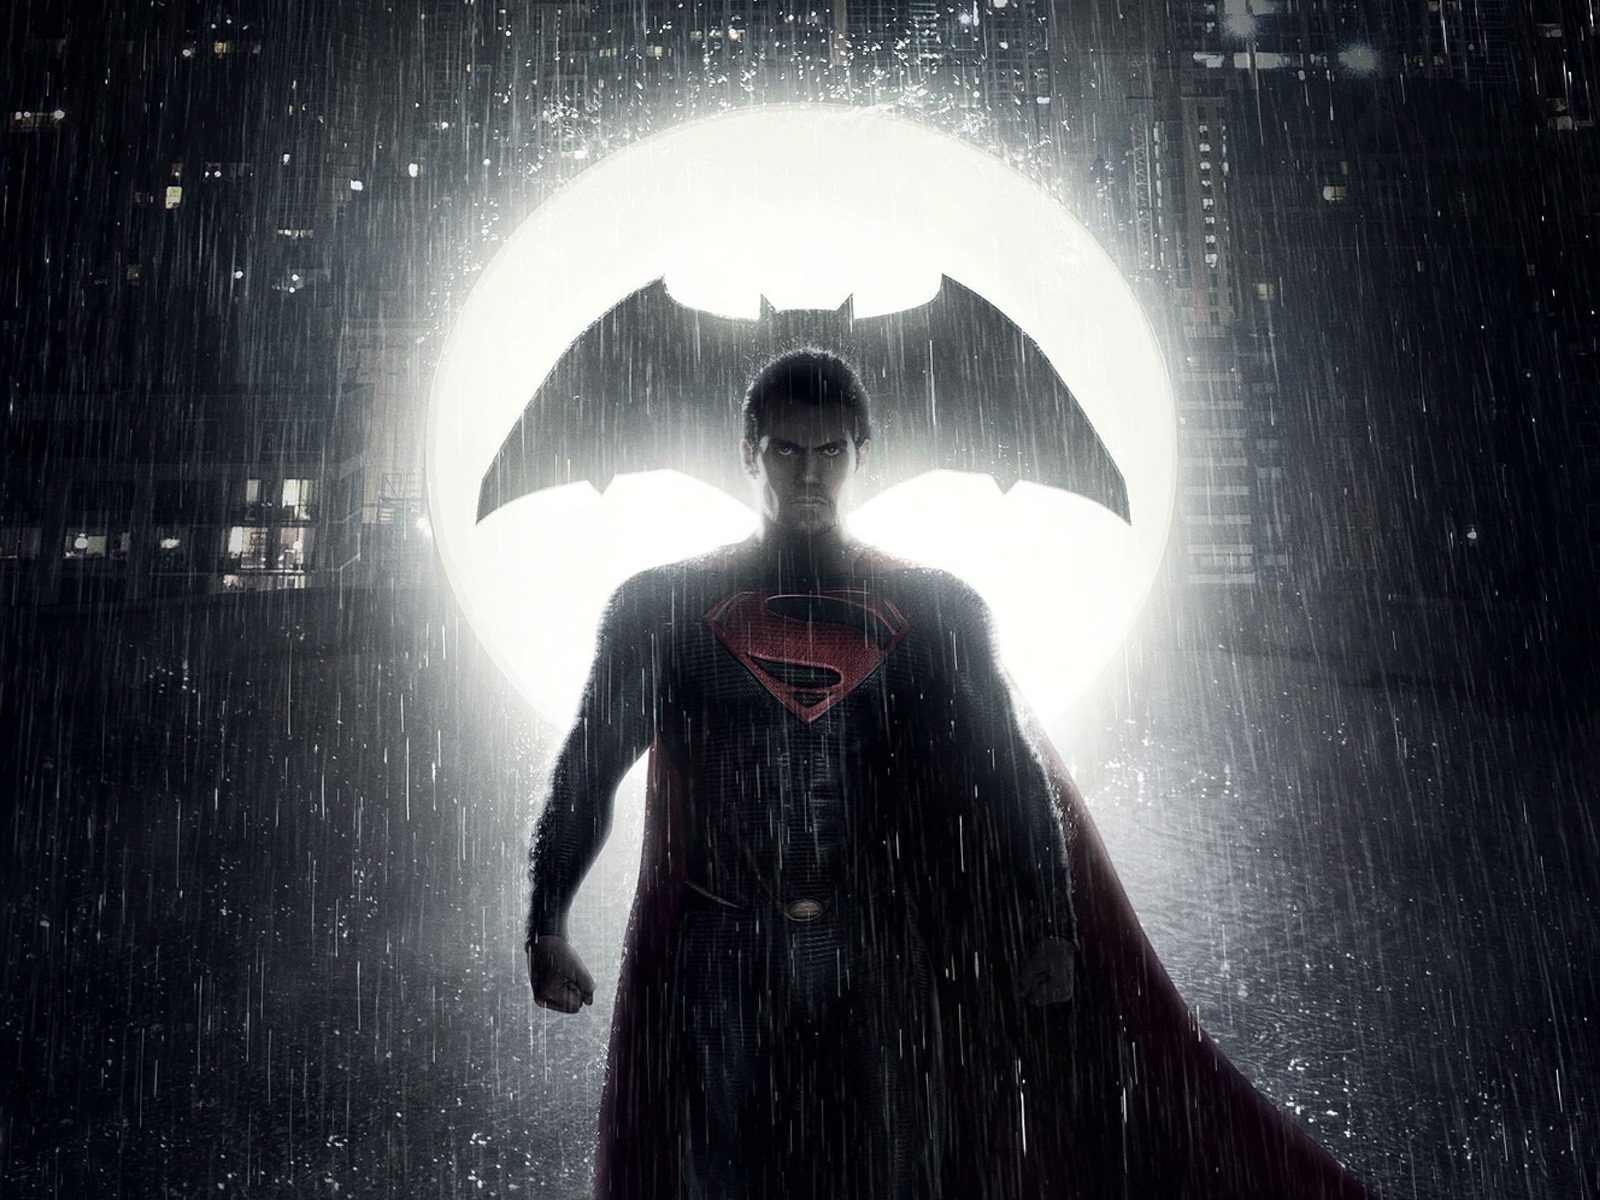 for windows download Batman v Superman: Dawn of Justice